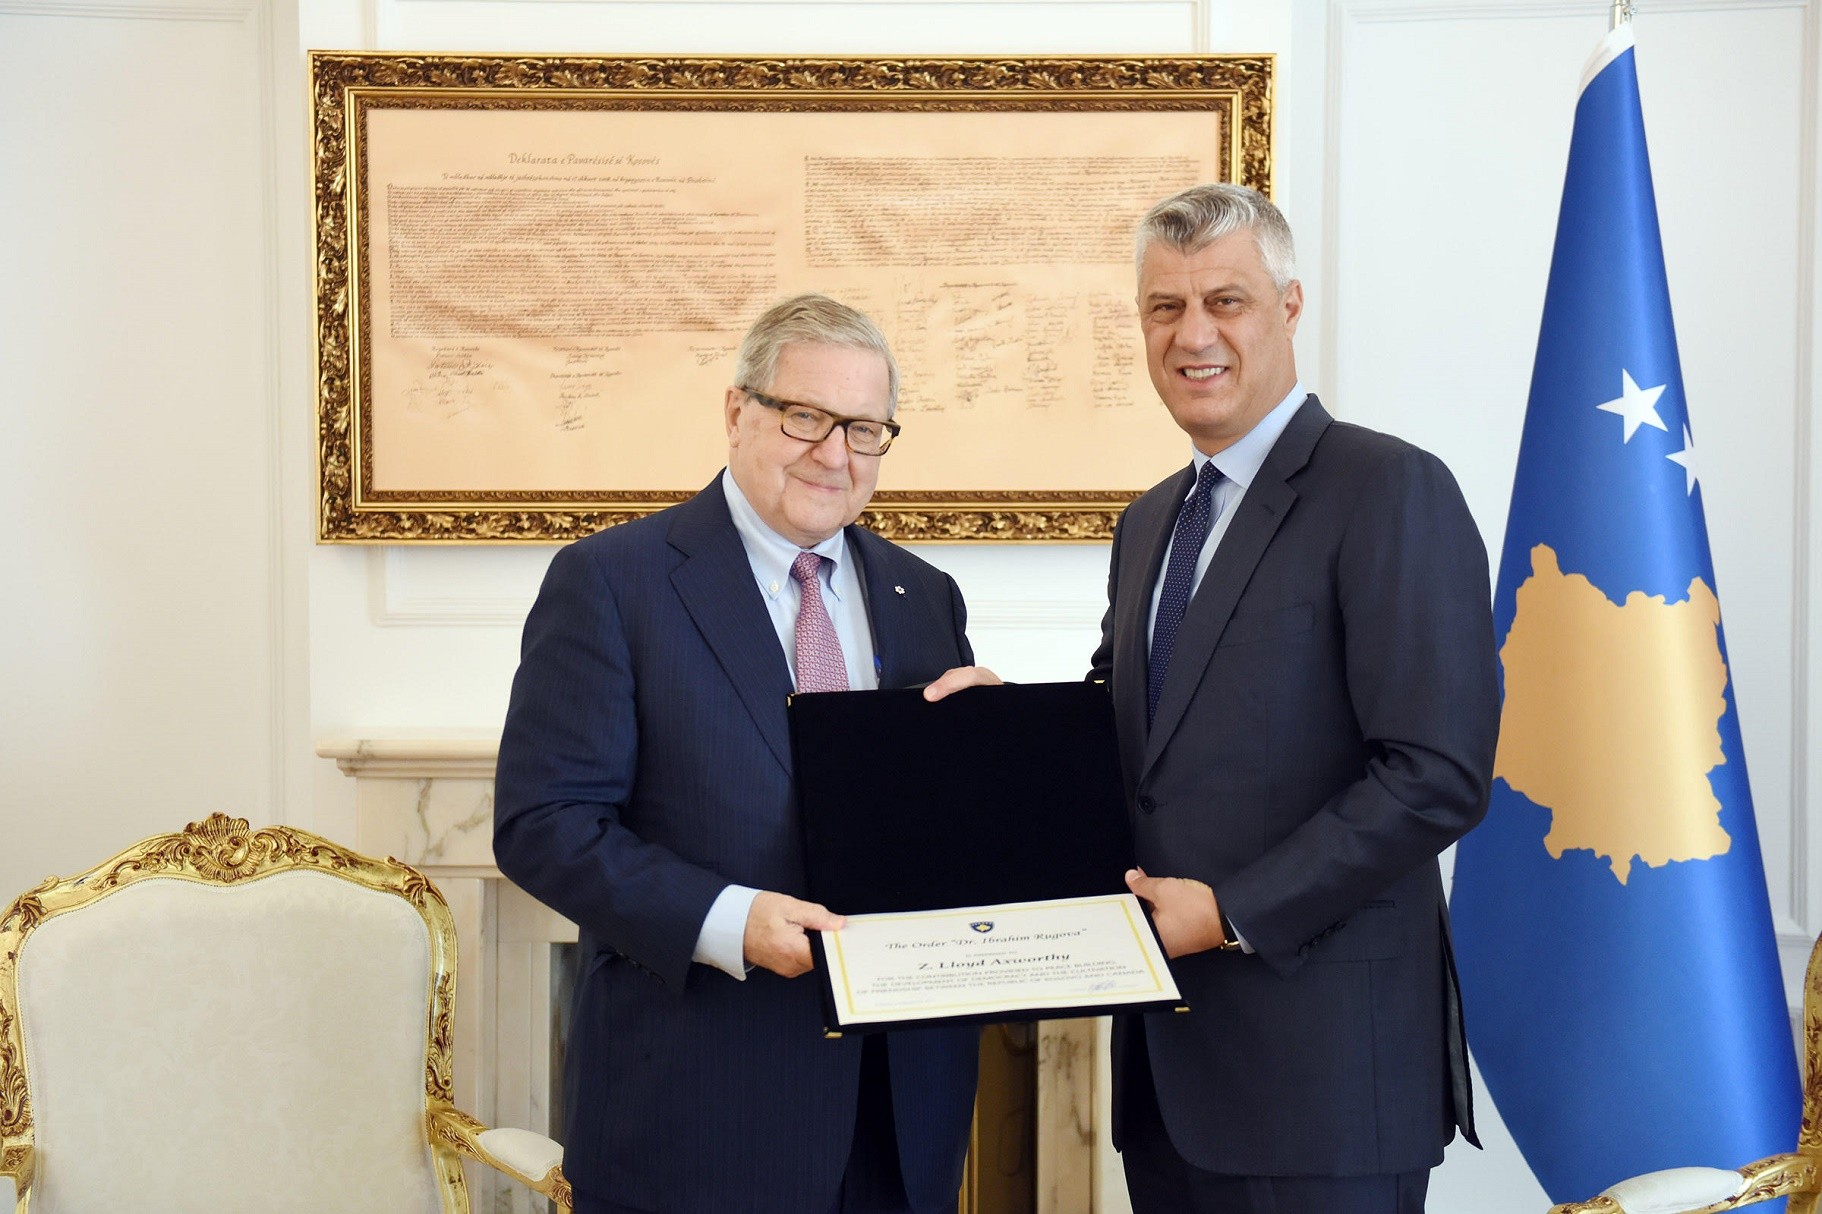 Presidenti Thaçi dekoroi Lloyd Axworthy, me Urdhrin “Dr. Ibrahim Rugova” 